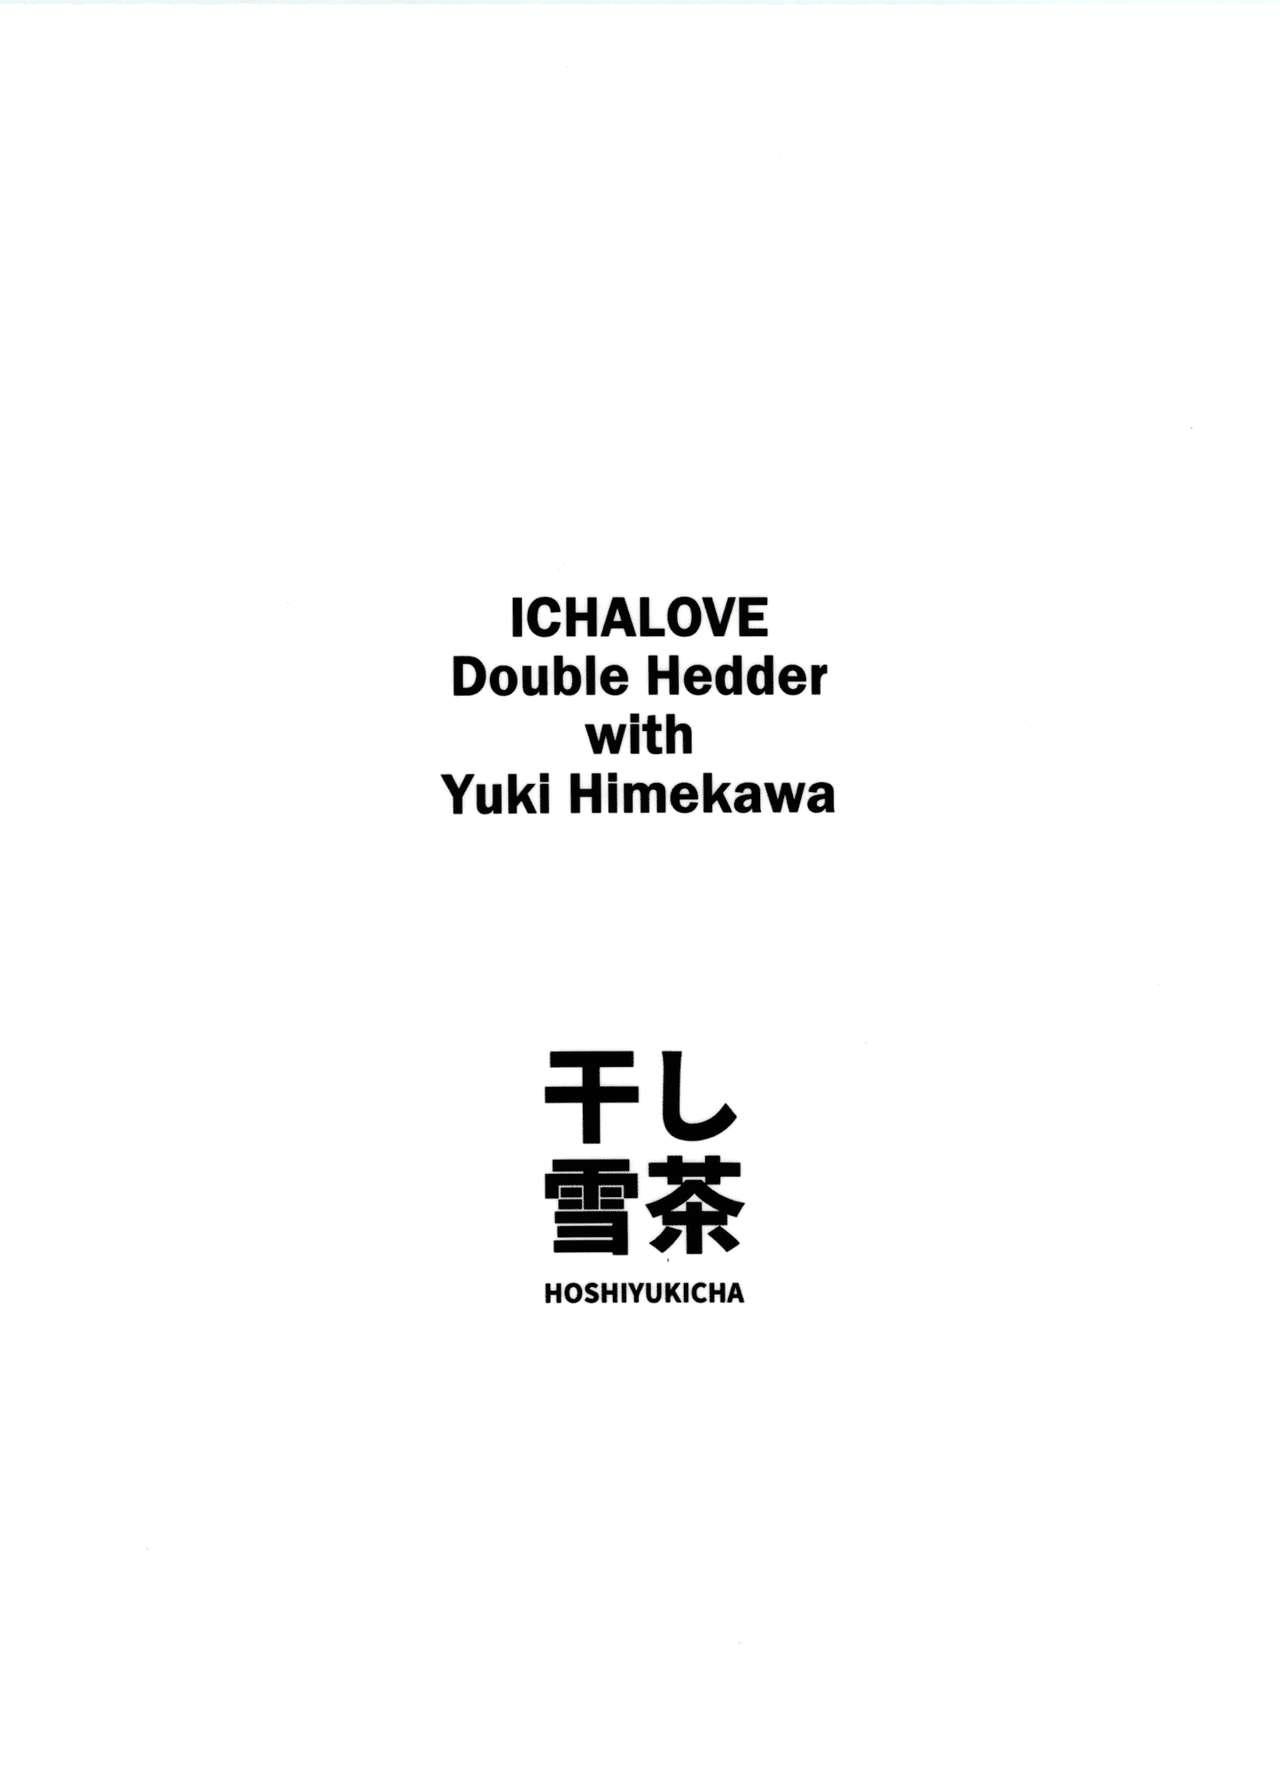 Himekawa Yuki to ICHALOVE Double Hedder 29